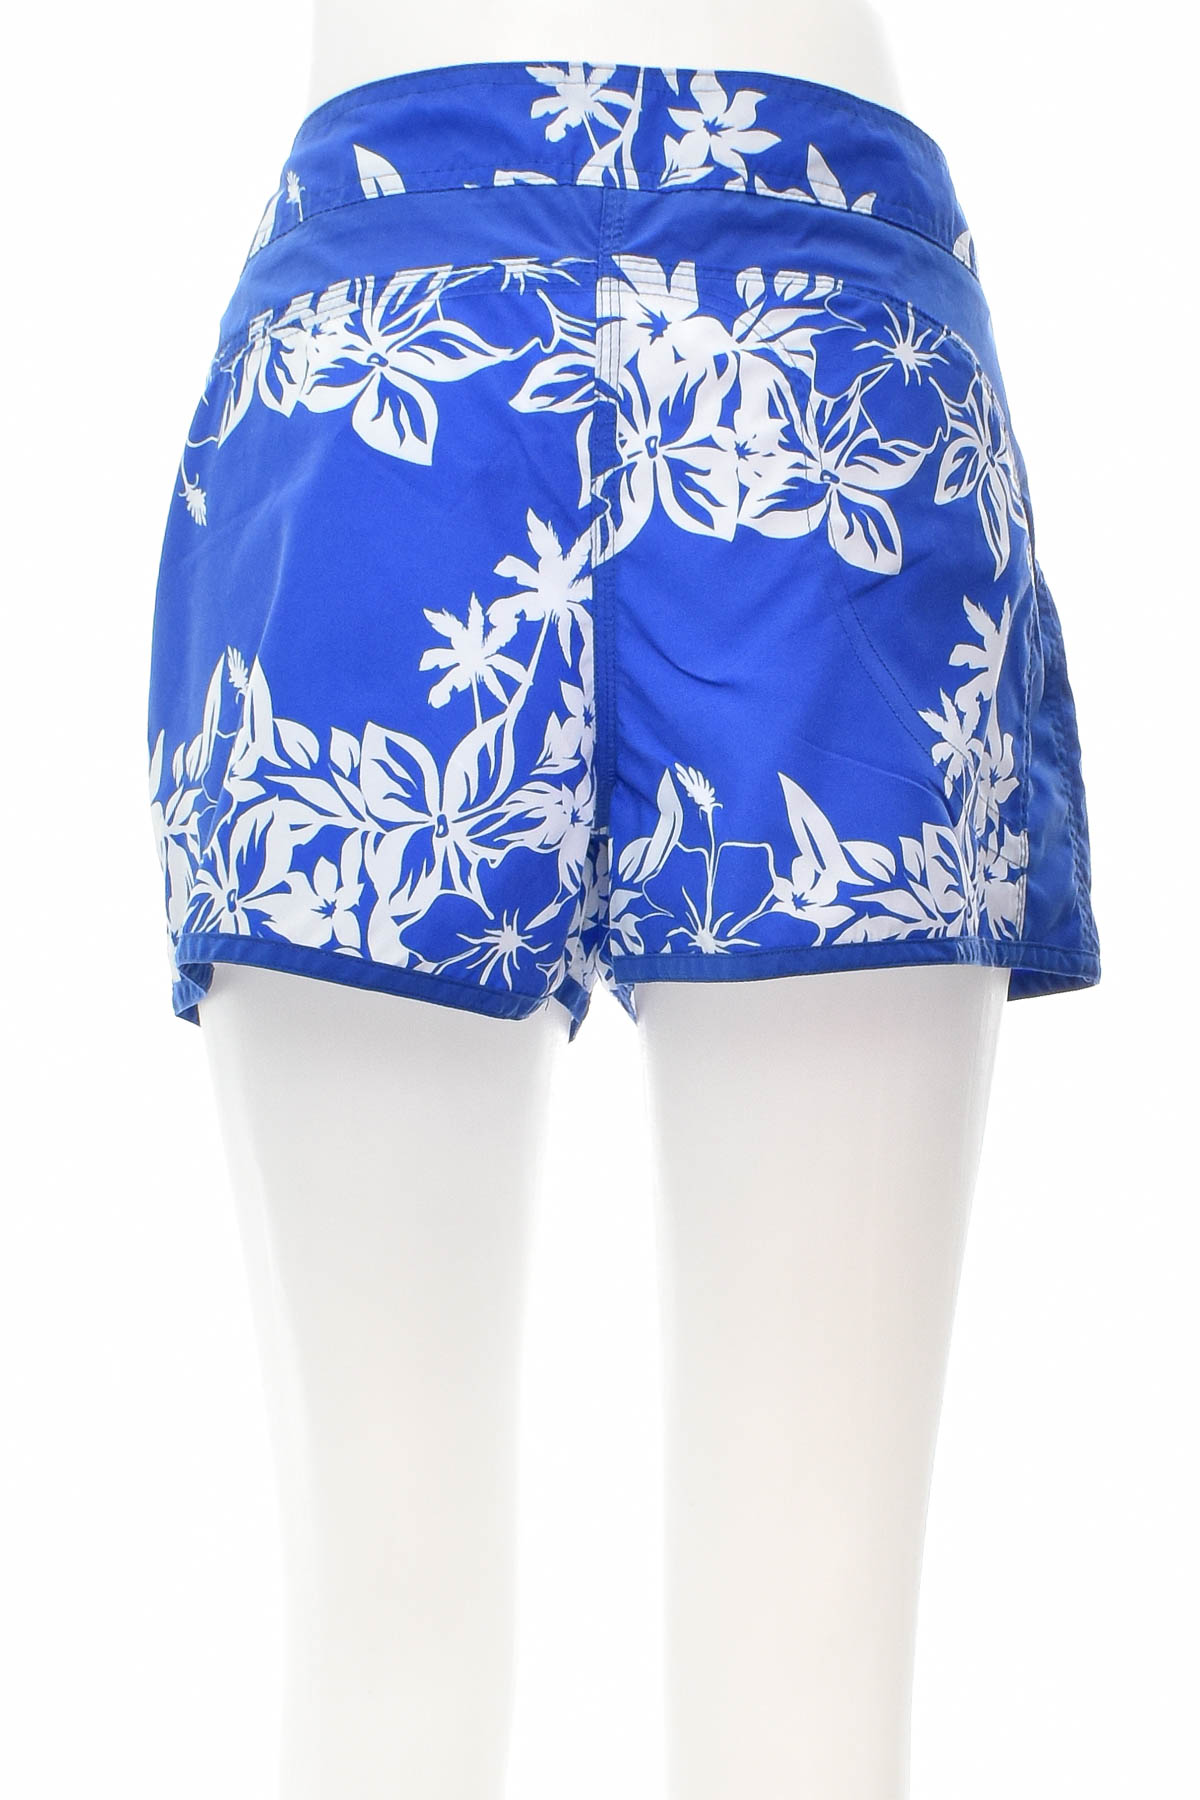 Female shorts - Tribord - 1